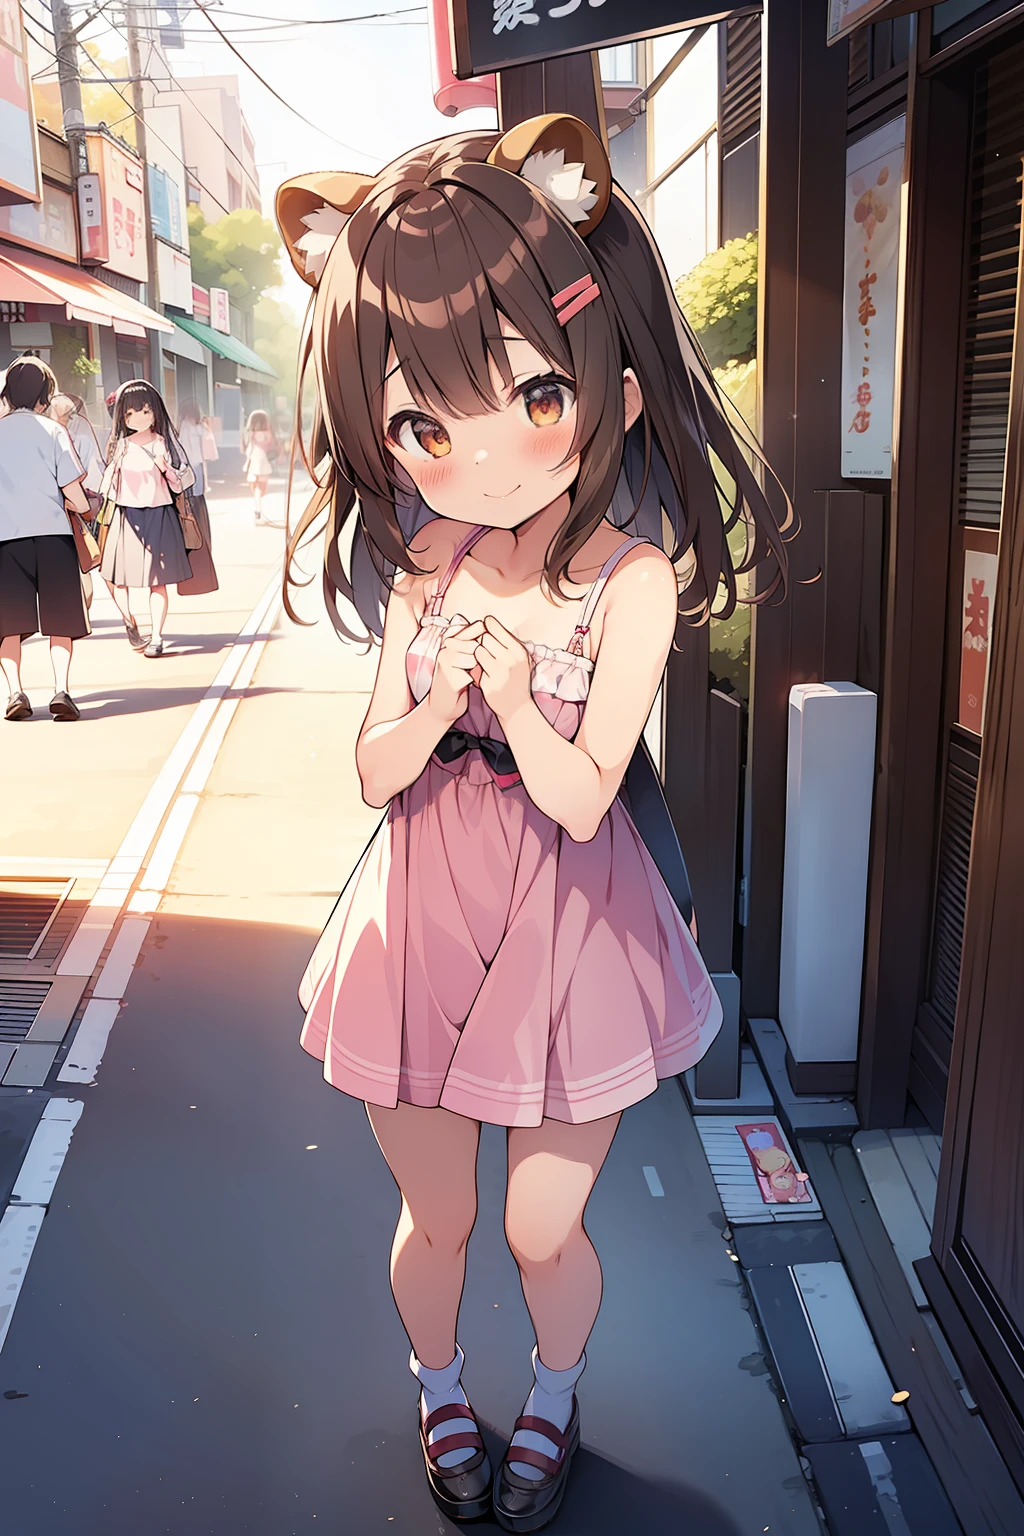 tanuki girl,  tanuki, kawaii, on a streets of tokyo, sunset, sunbeams, magical lighting, akihabara, in cute short dress, undies visible, panties visible, smiling, blushing, shy pose, kawaii outfit, beautiful hair, looking away